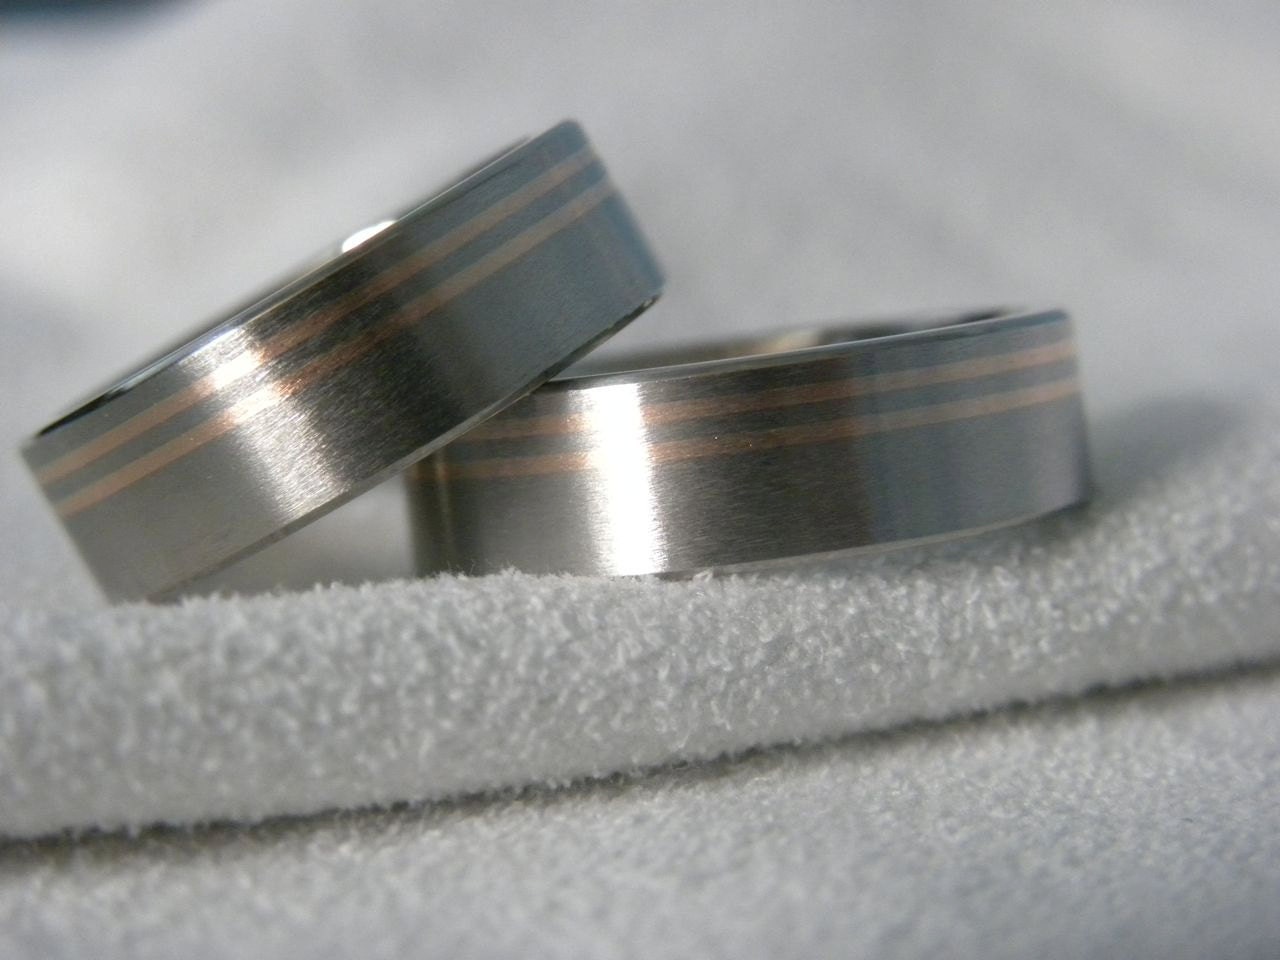  Matching  Ring  Set or Wedding Bands  Offset Inlay Stripes 